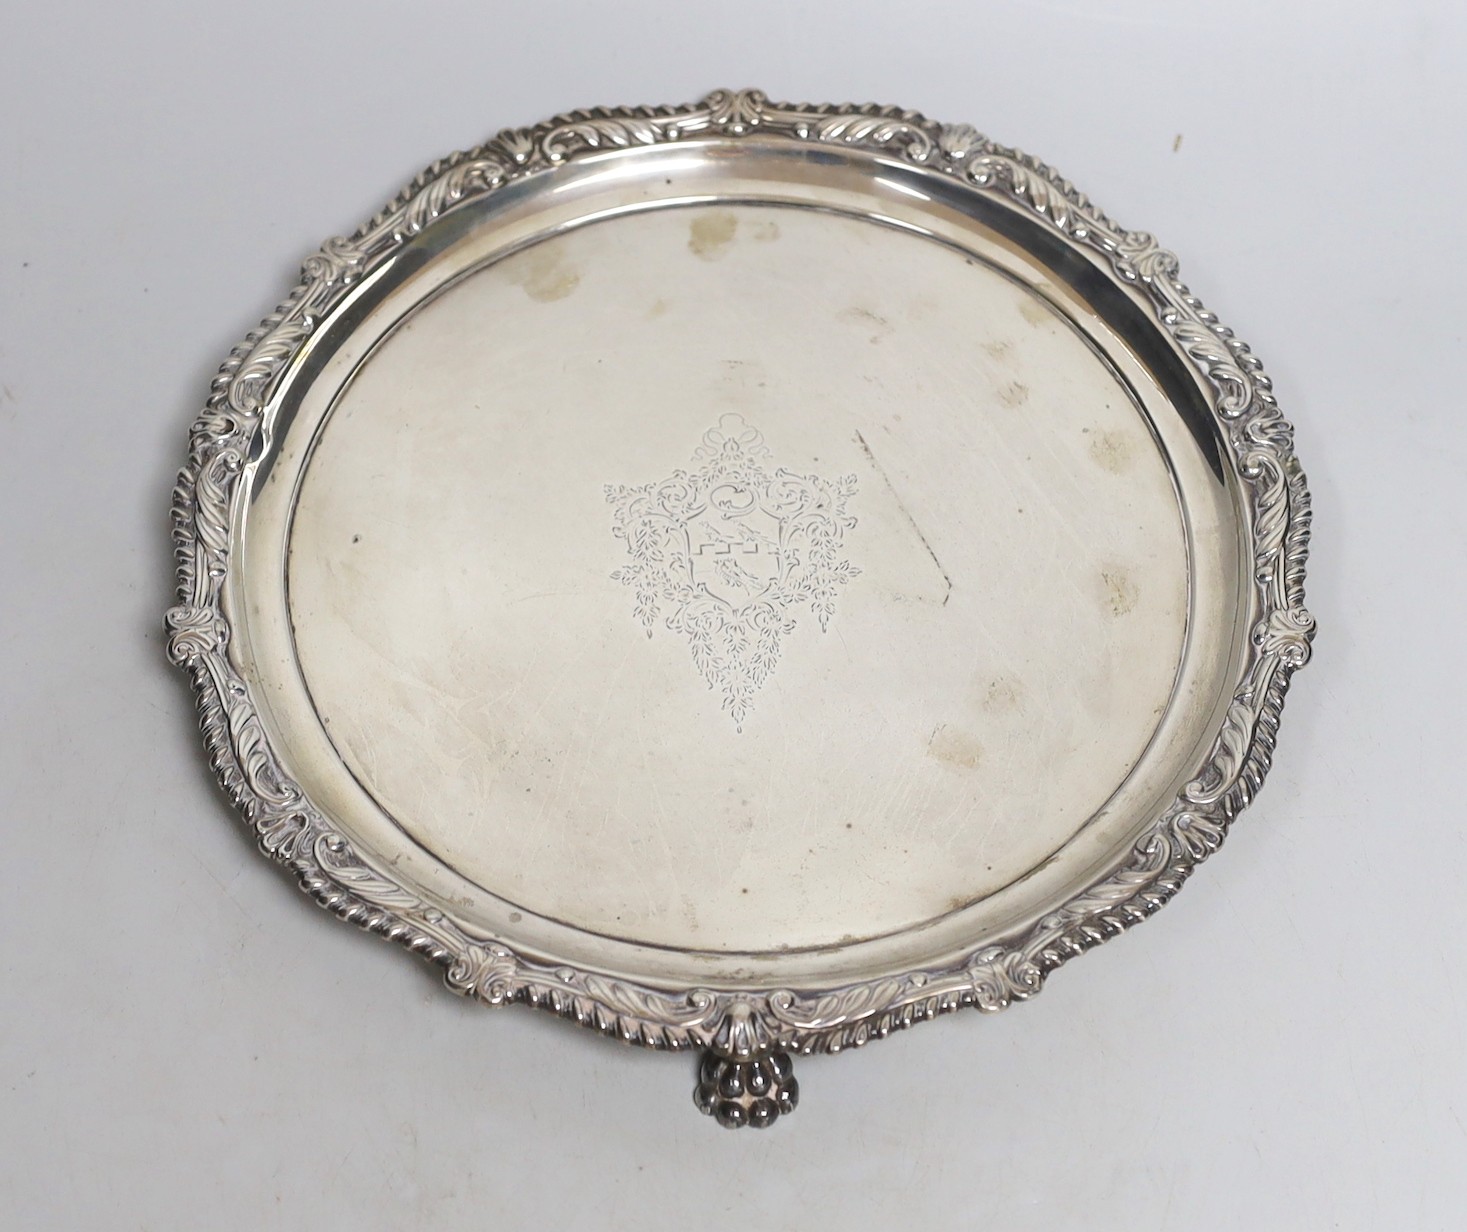 A George III silver salver, Samuel Roberts, George Cadman & Co, Sheffield, 1813, 25.7cm, 14.2oz (holes).